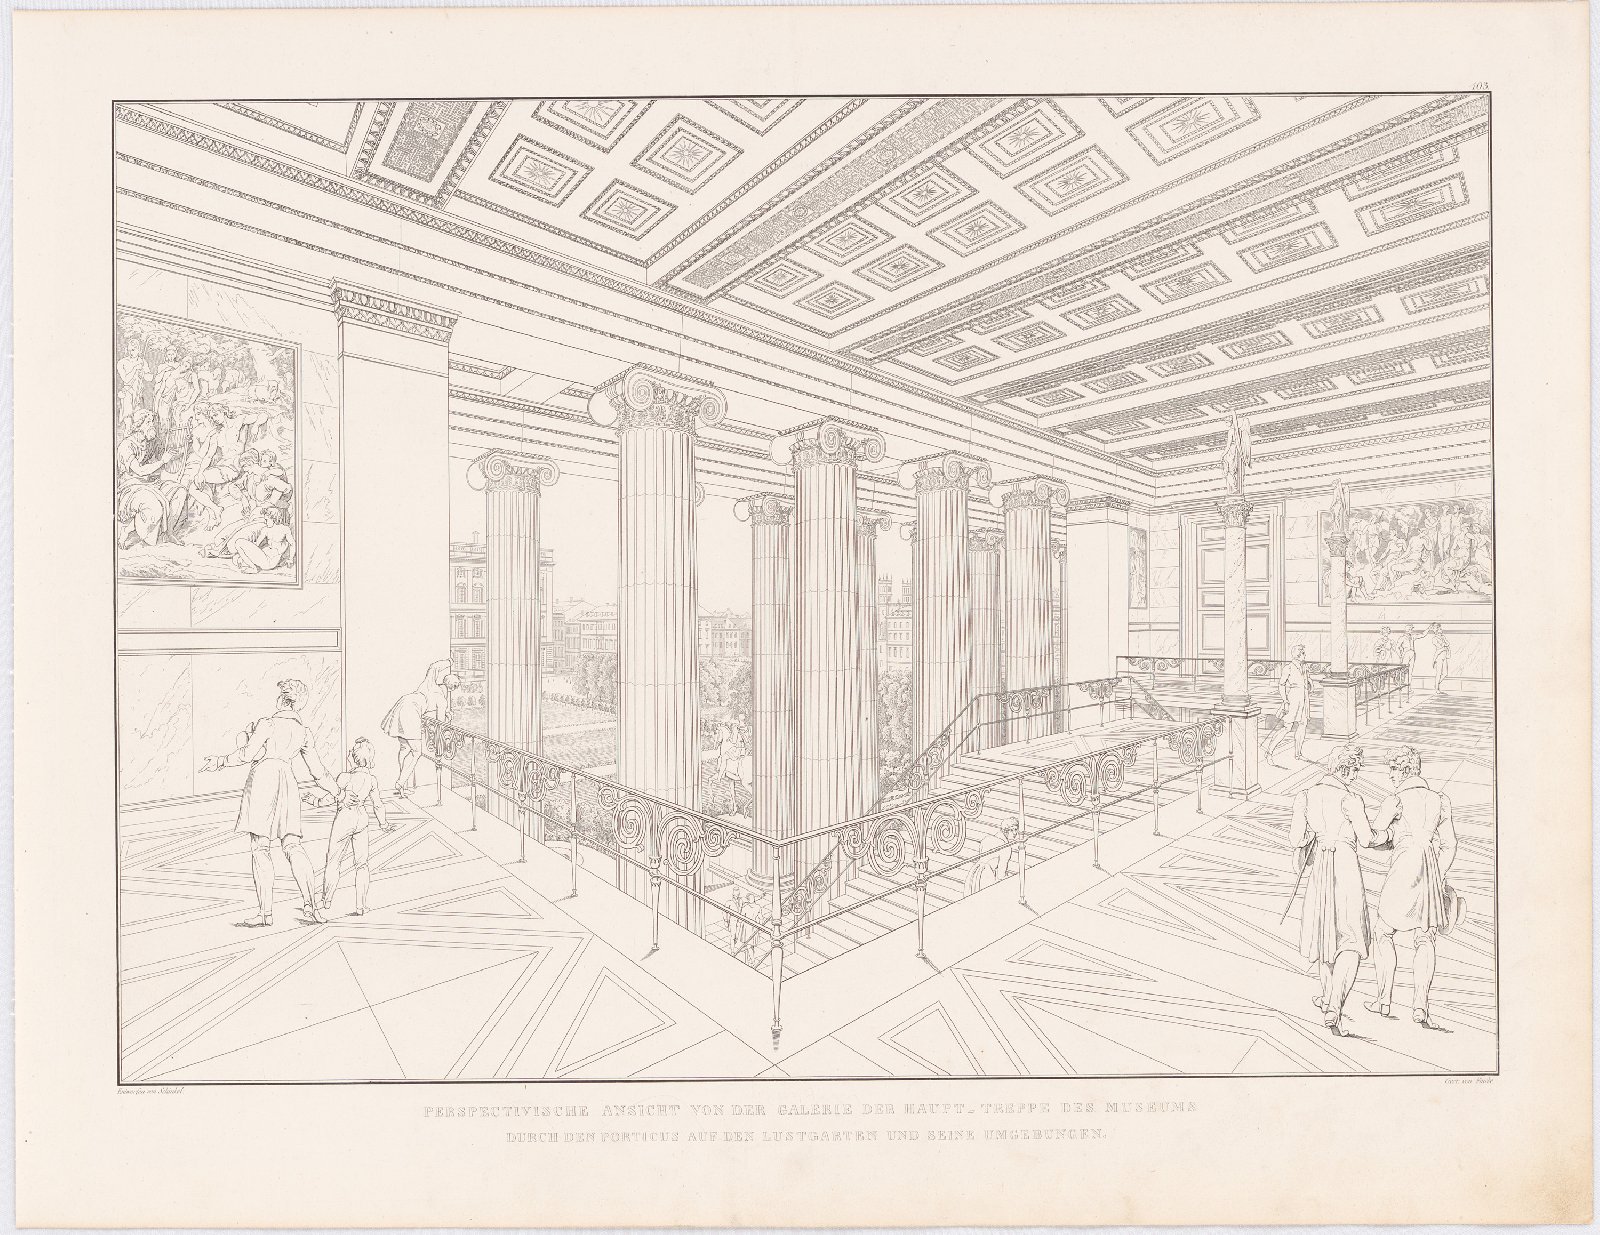 Karl Friedrich Schinkel (1781 - 1841), perspective drawing of the Altes Museum's interior staircase (1858). Source: _Architekturmuseum TU Berlin, Inv. Nr. SAE 1858,103_.